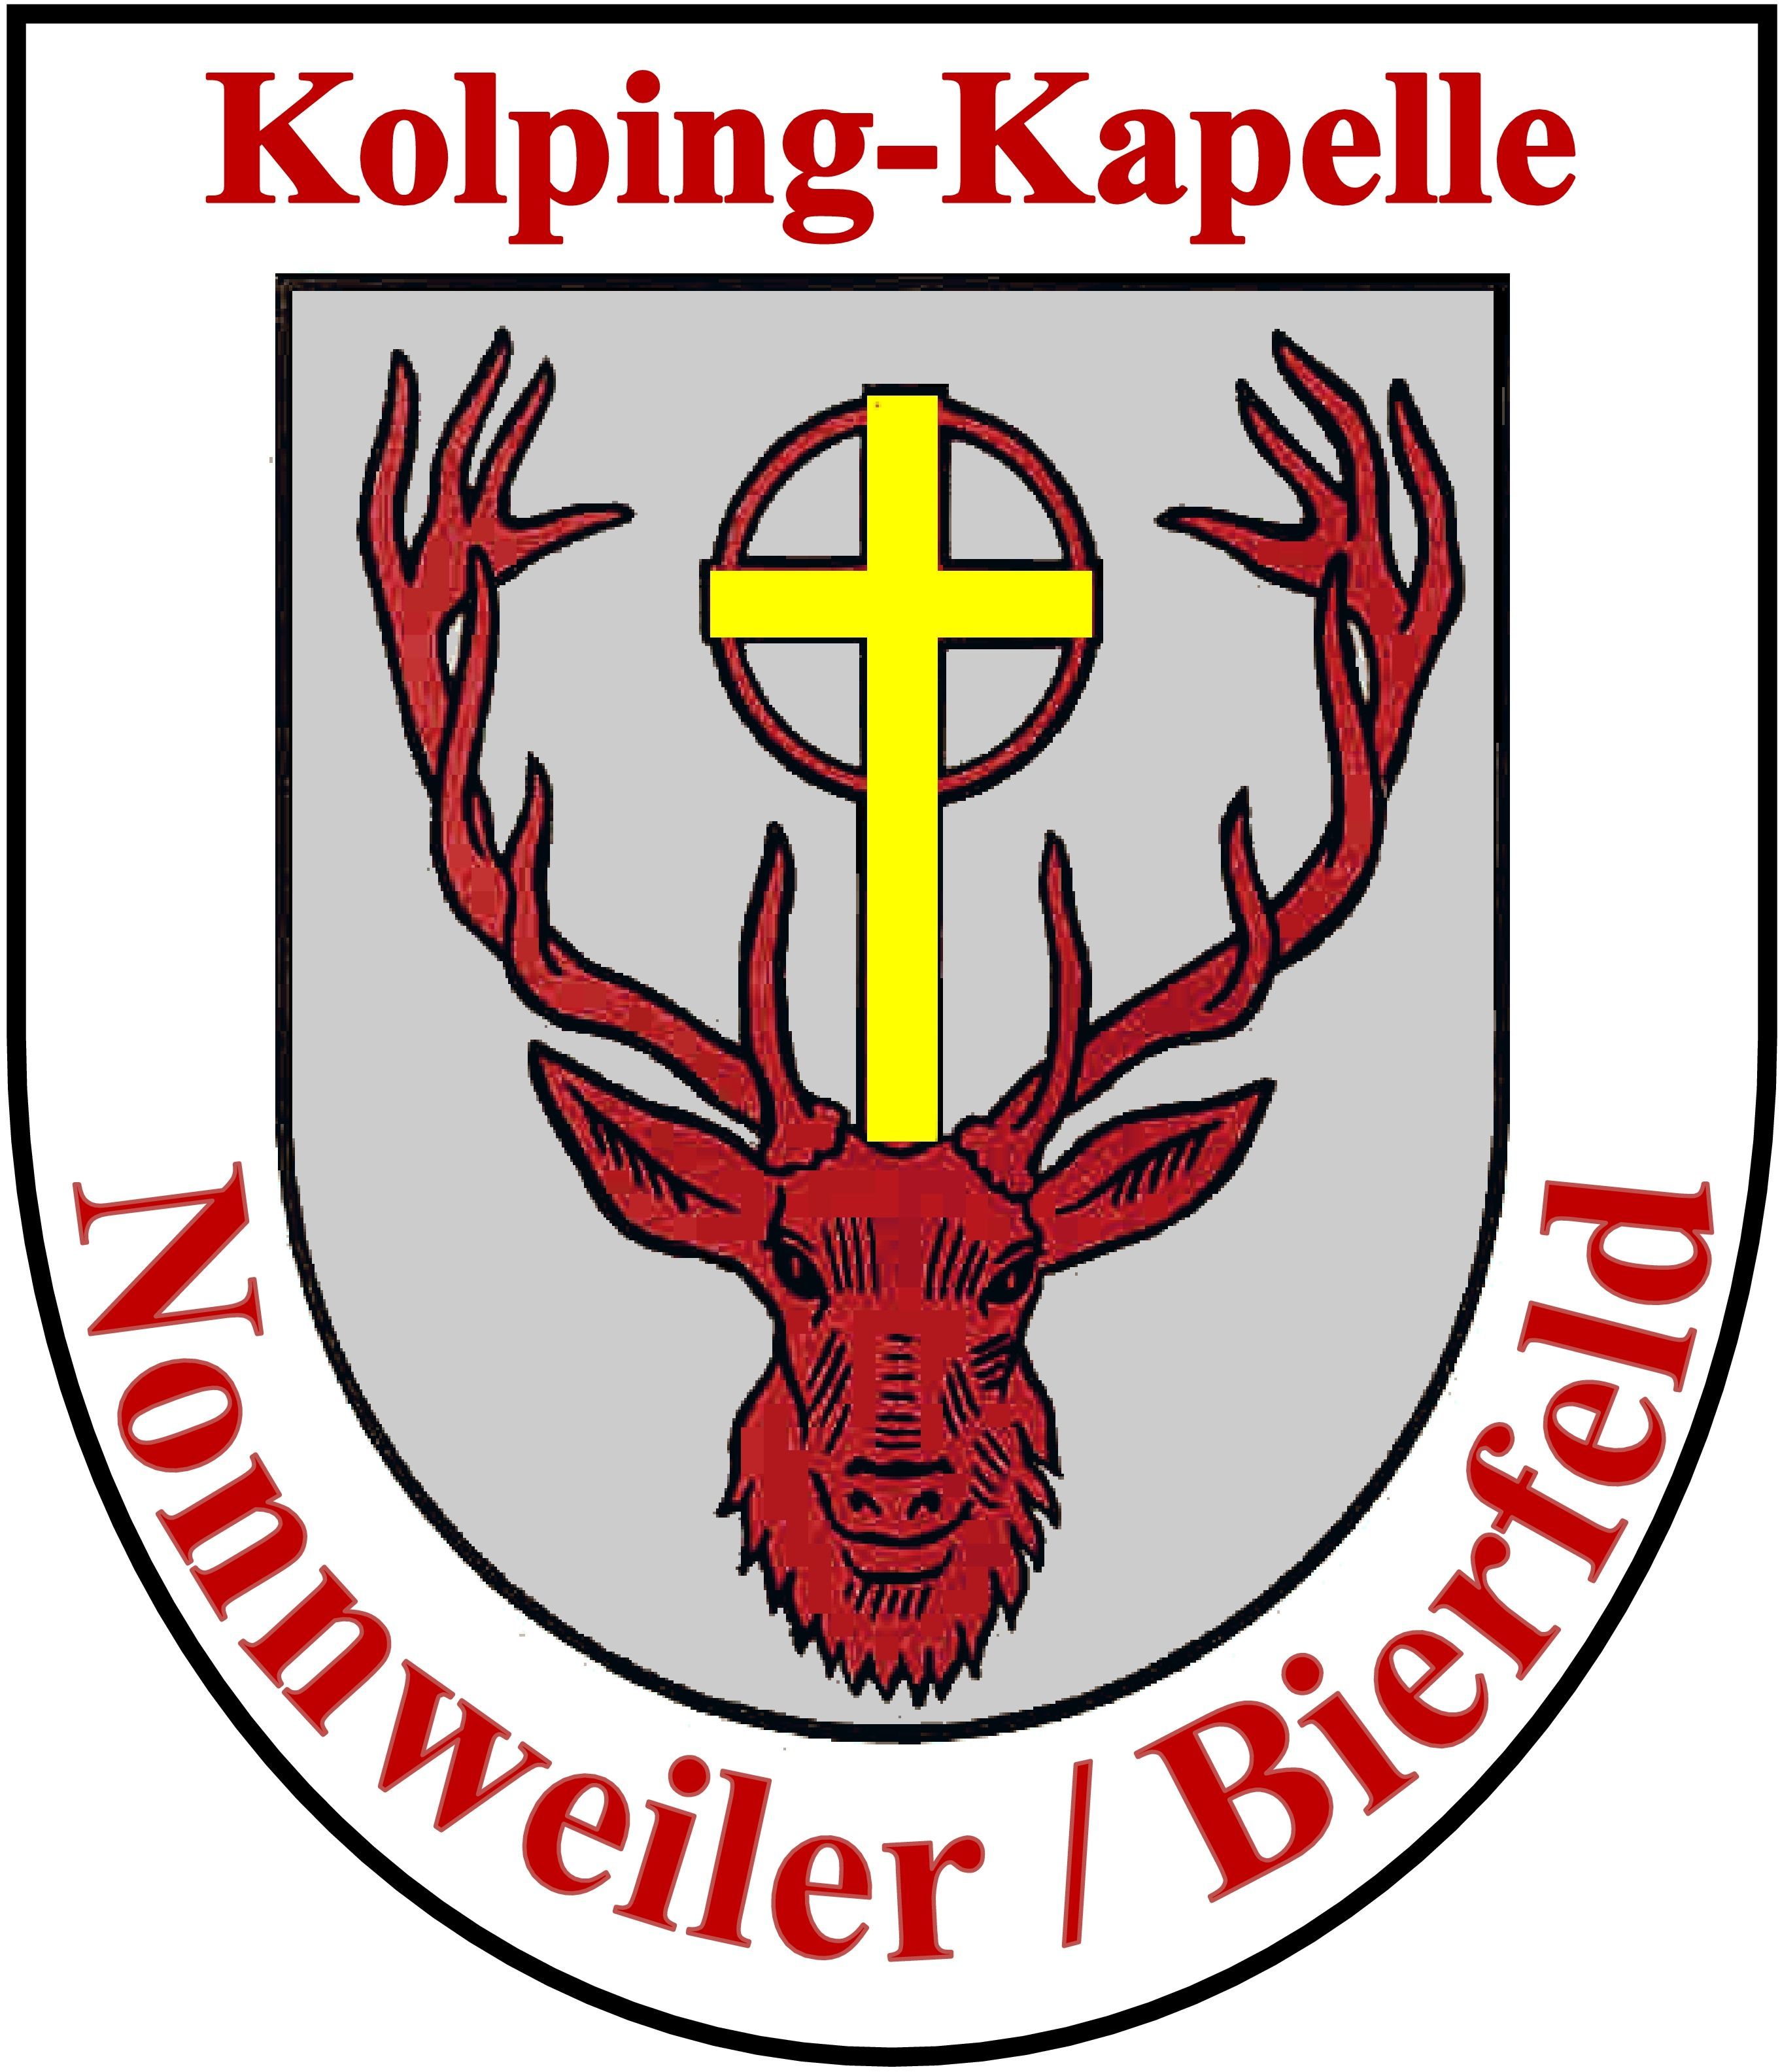 Profilbild des Vereins Kolping-Kapelle Nonnweiler/Bierfeld